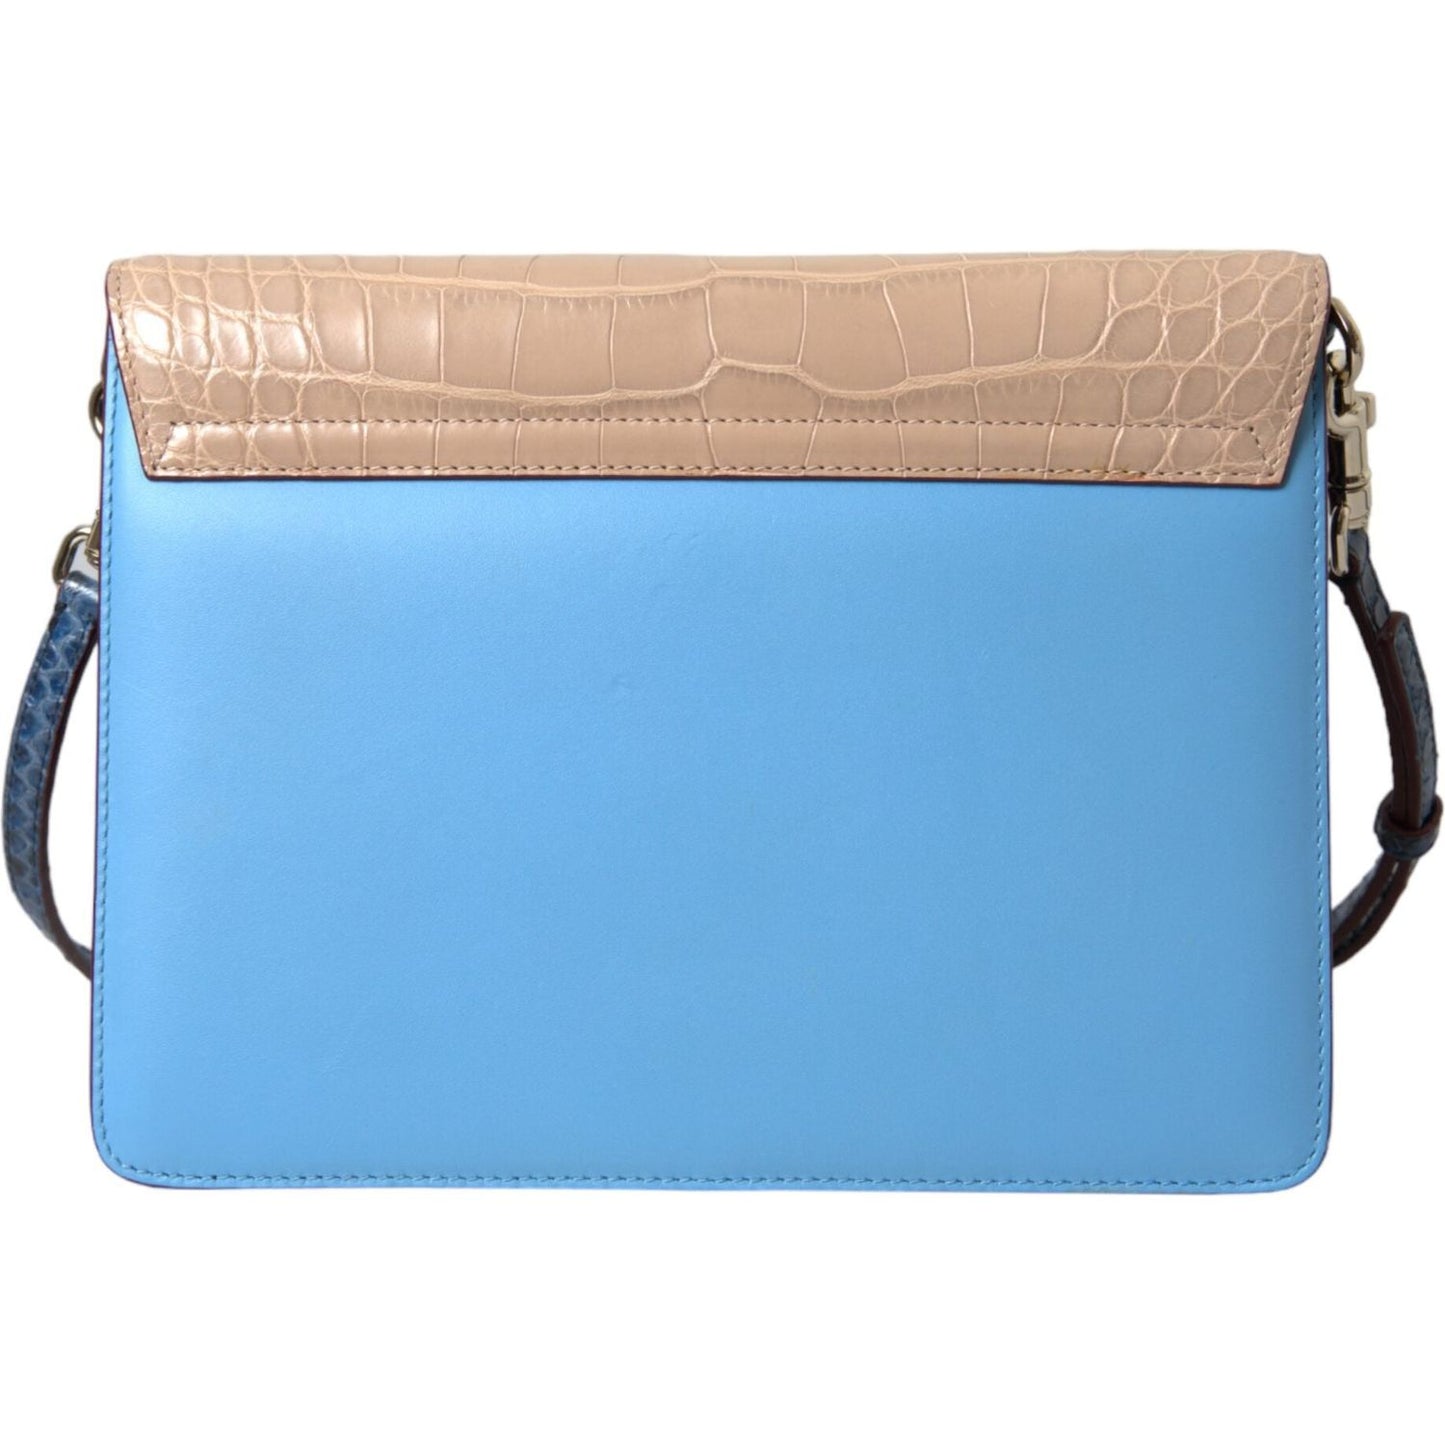 Blue Beige Exotic Leather LUCIA Crossbody Purse Bag